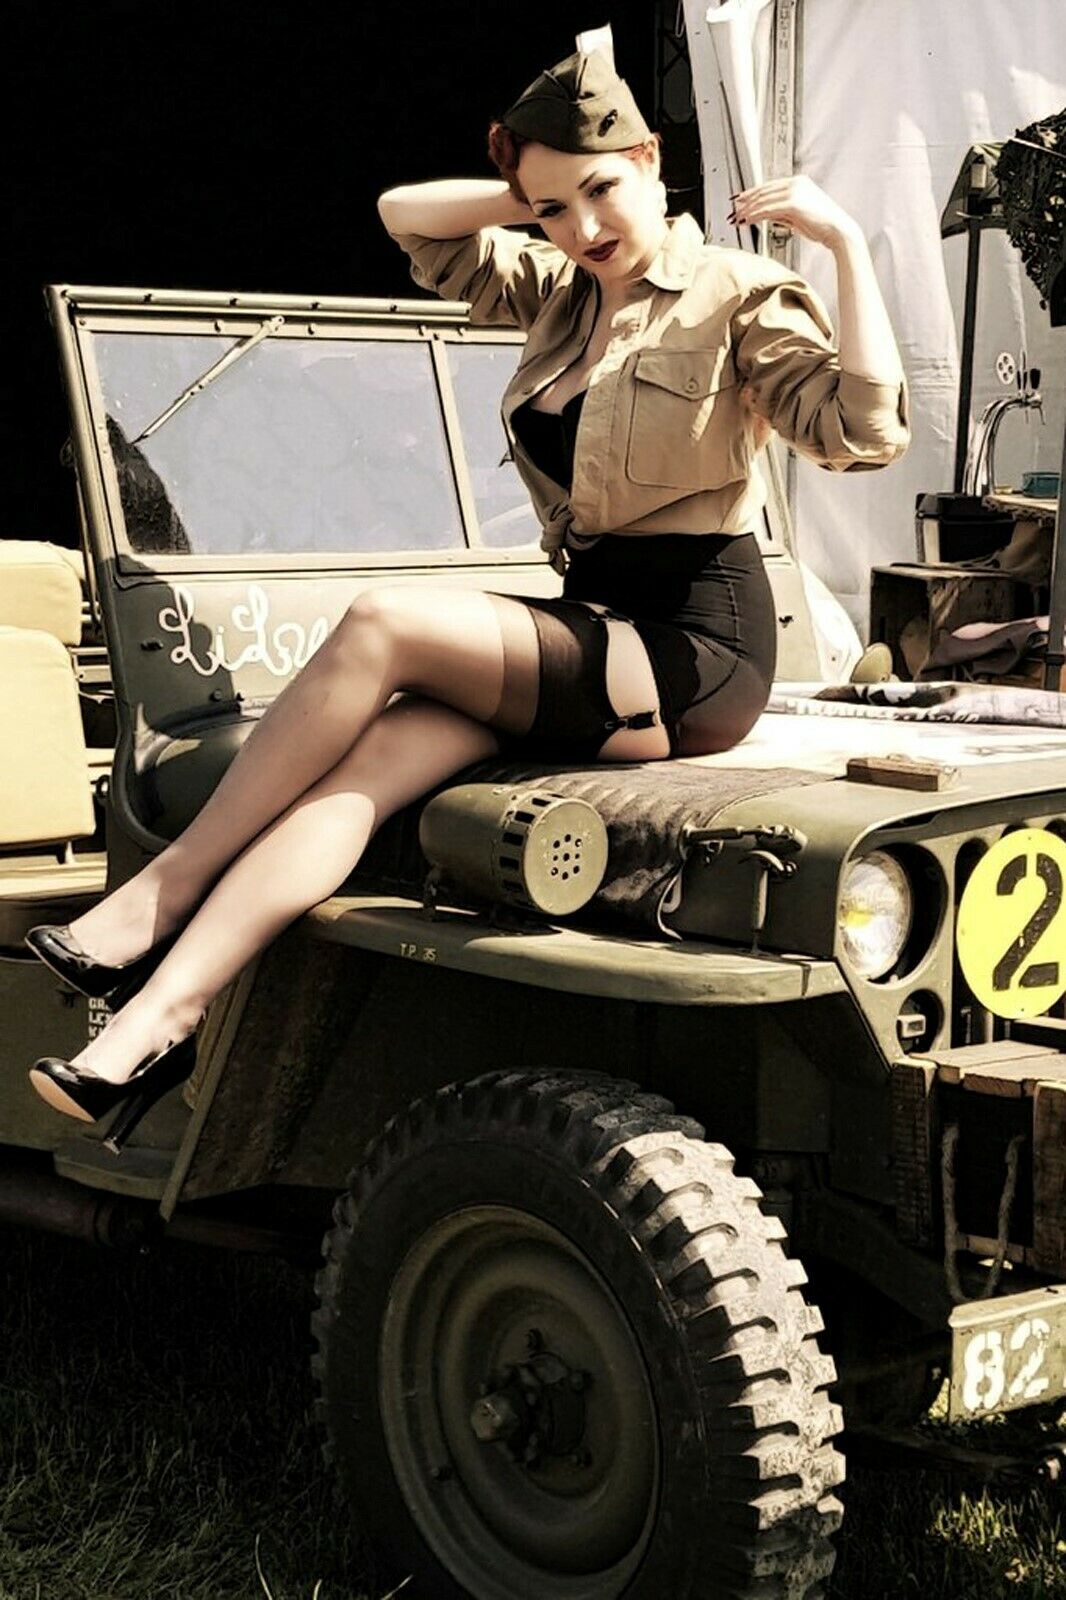 Jeep Willys Pinup Girl Woman Risqe Vintage Retro War Photo Ww2 Size 4 X 6 Inch Q